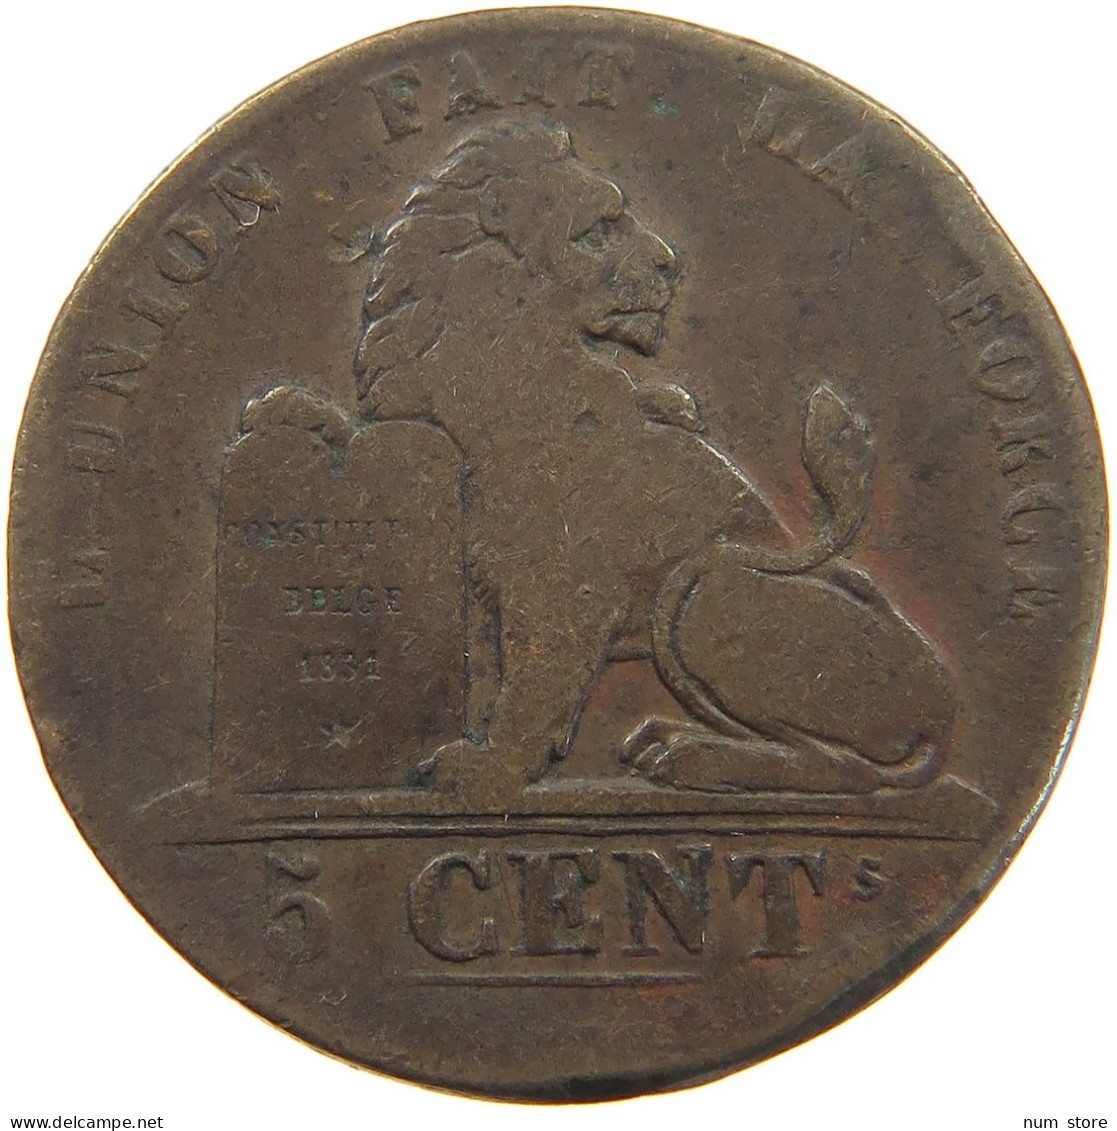 BELGIUM 5 CENTIMES 1837 Leopold I. (1831-1865) #a041 0463 - 5 Cents